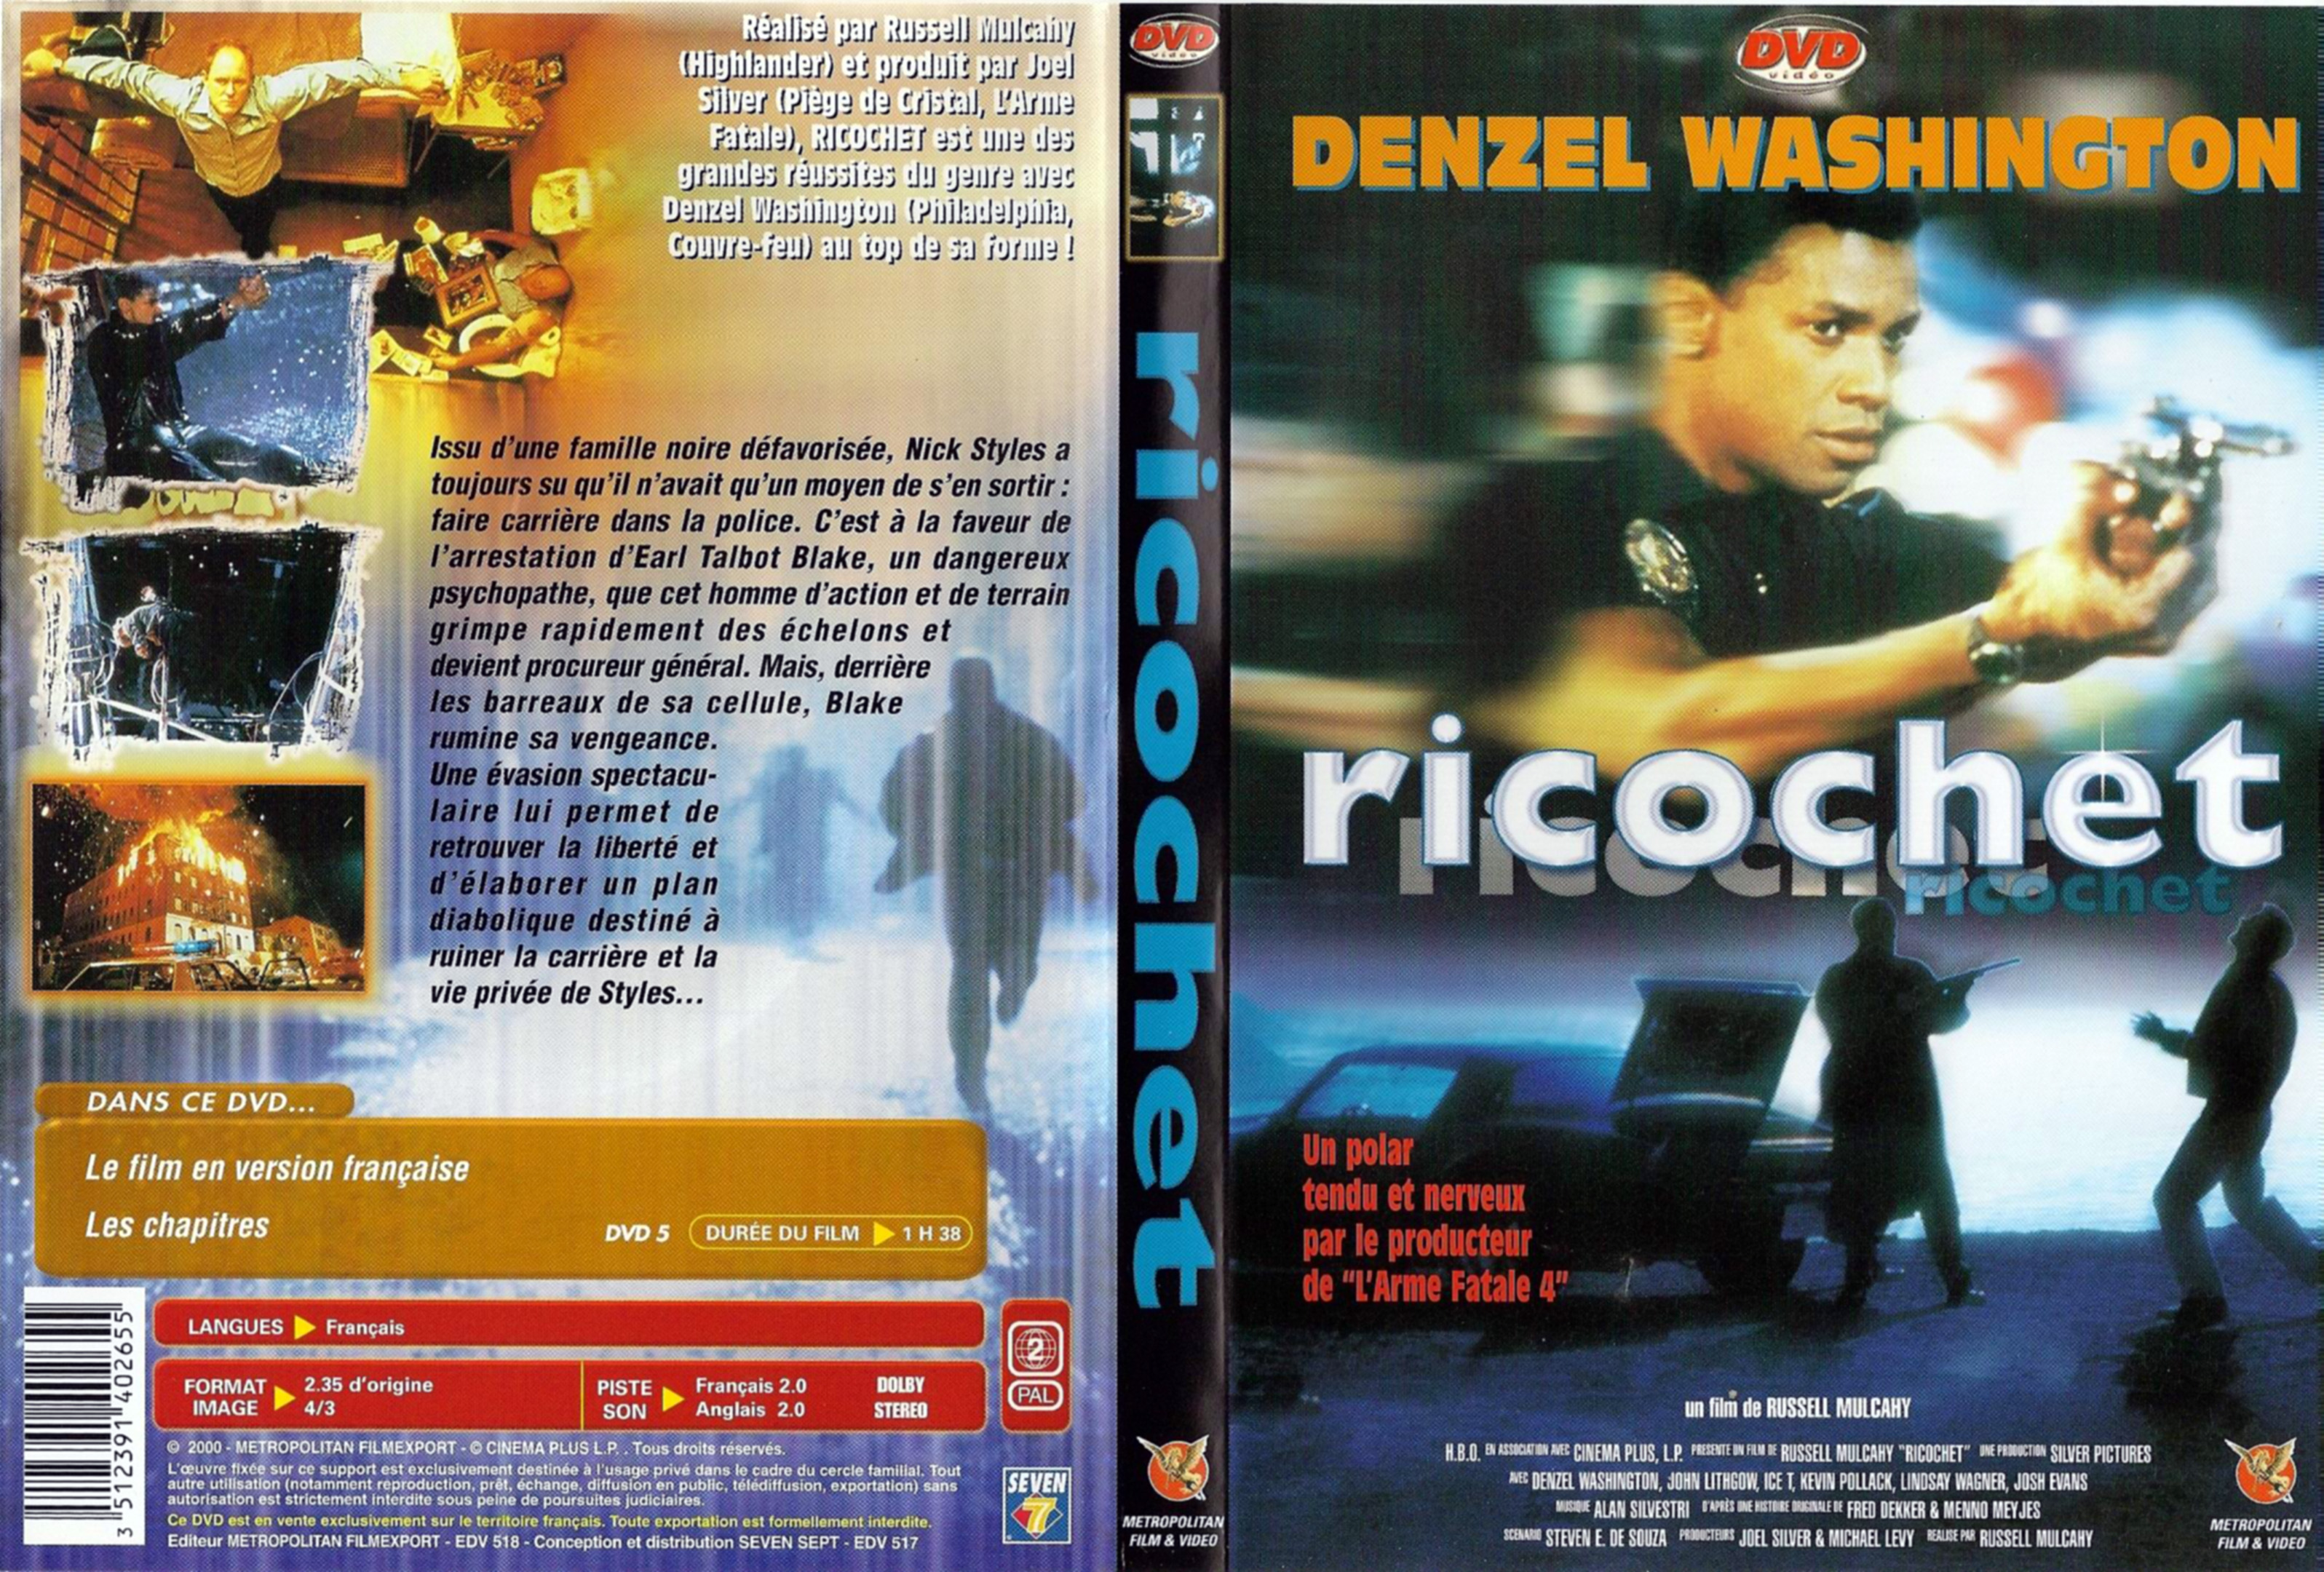 Jaquette DVD Ricochet v3